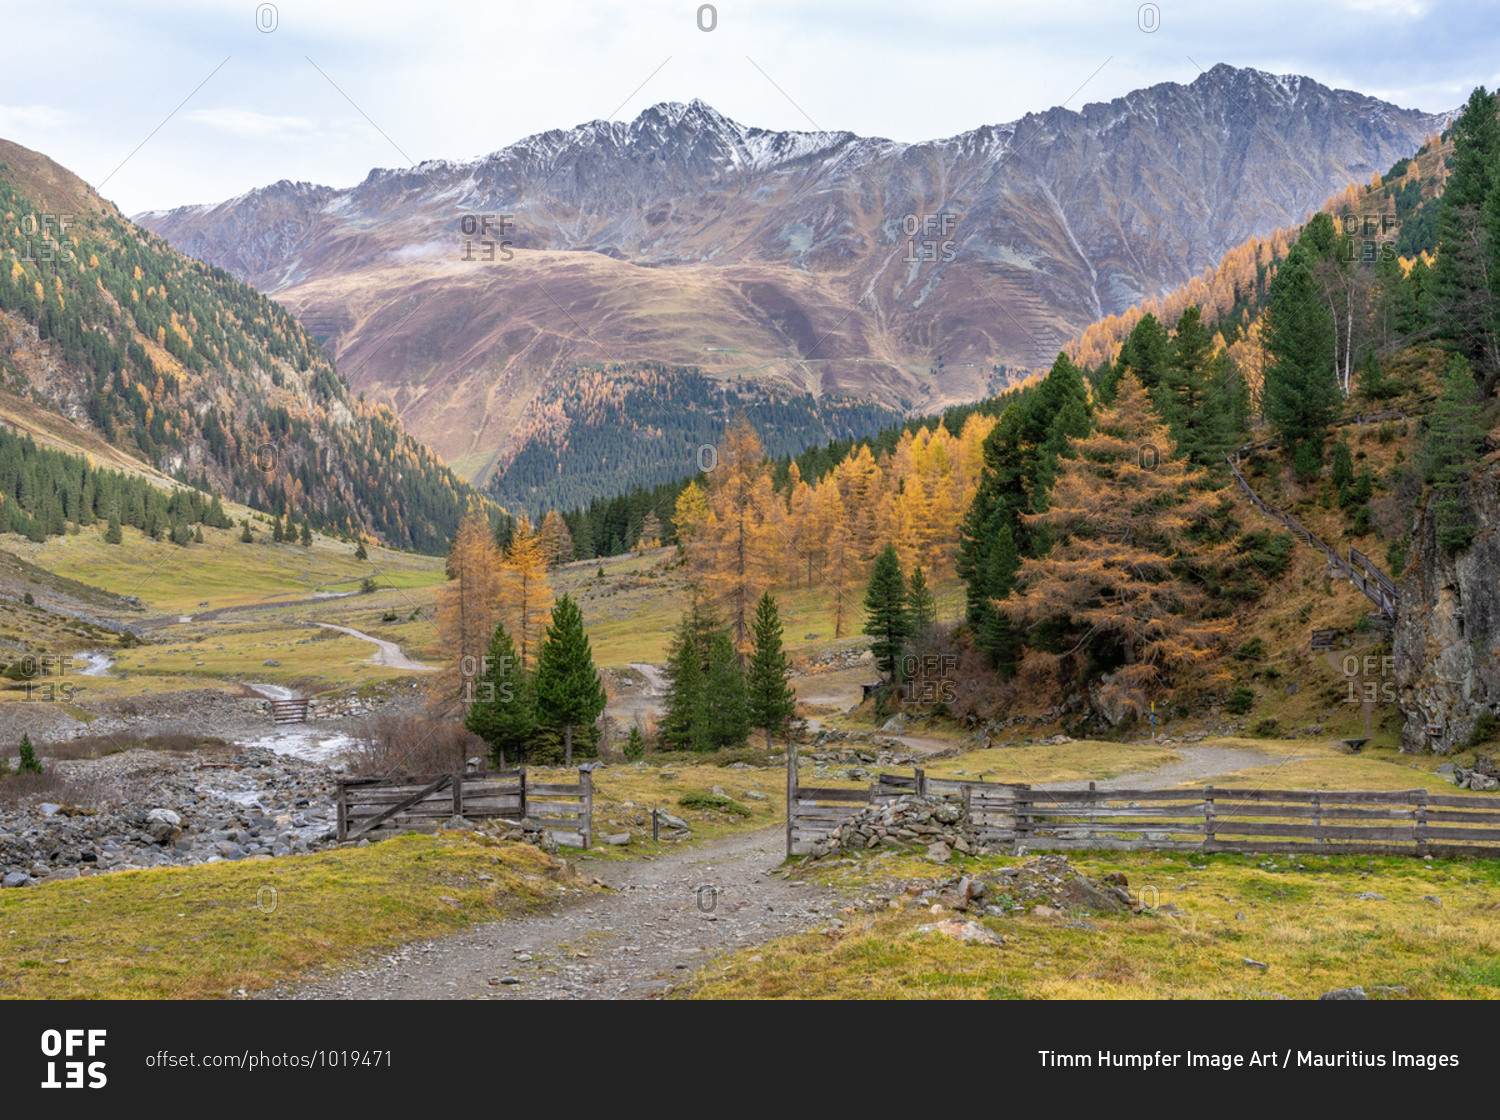 Europe, Austria, Tyrol, Stubai Alps, Sellrain, St. Sigmund im Sellrain, looking down through the autumn colored Gleirschtal